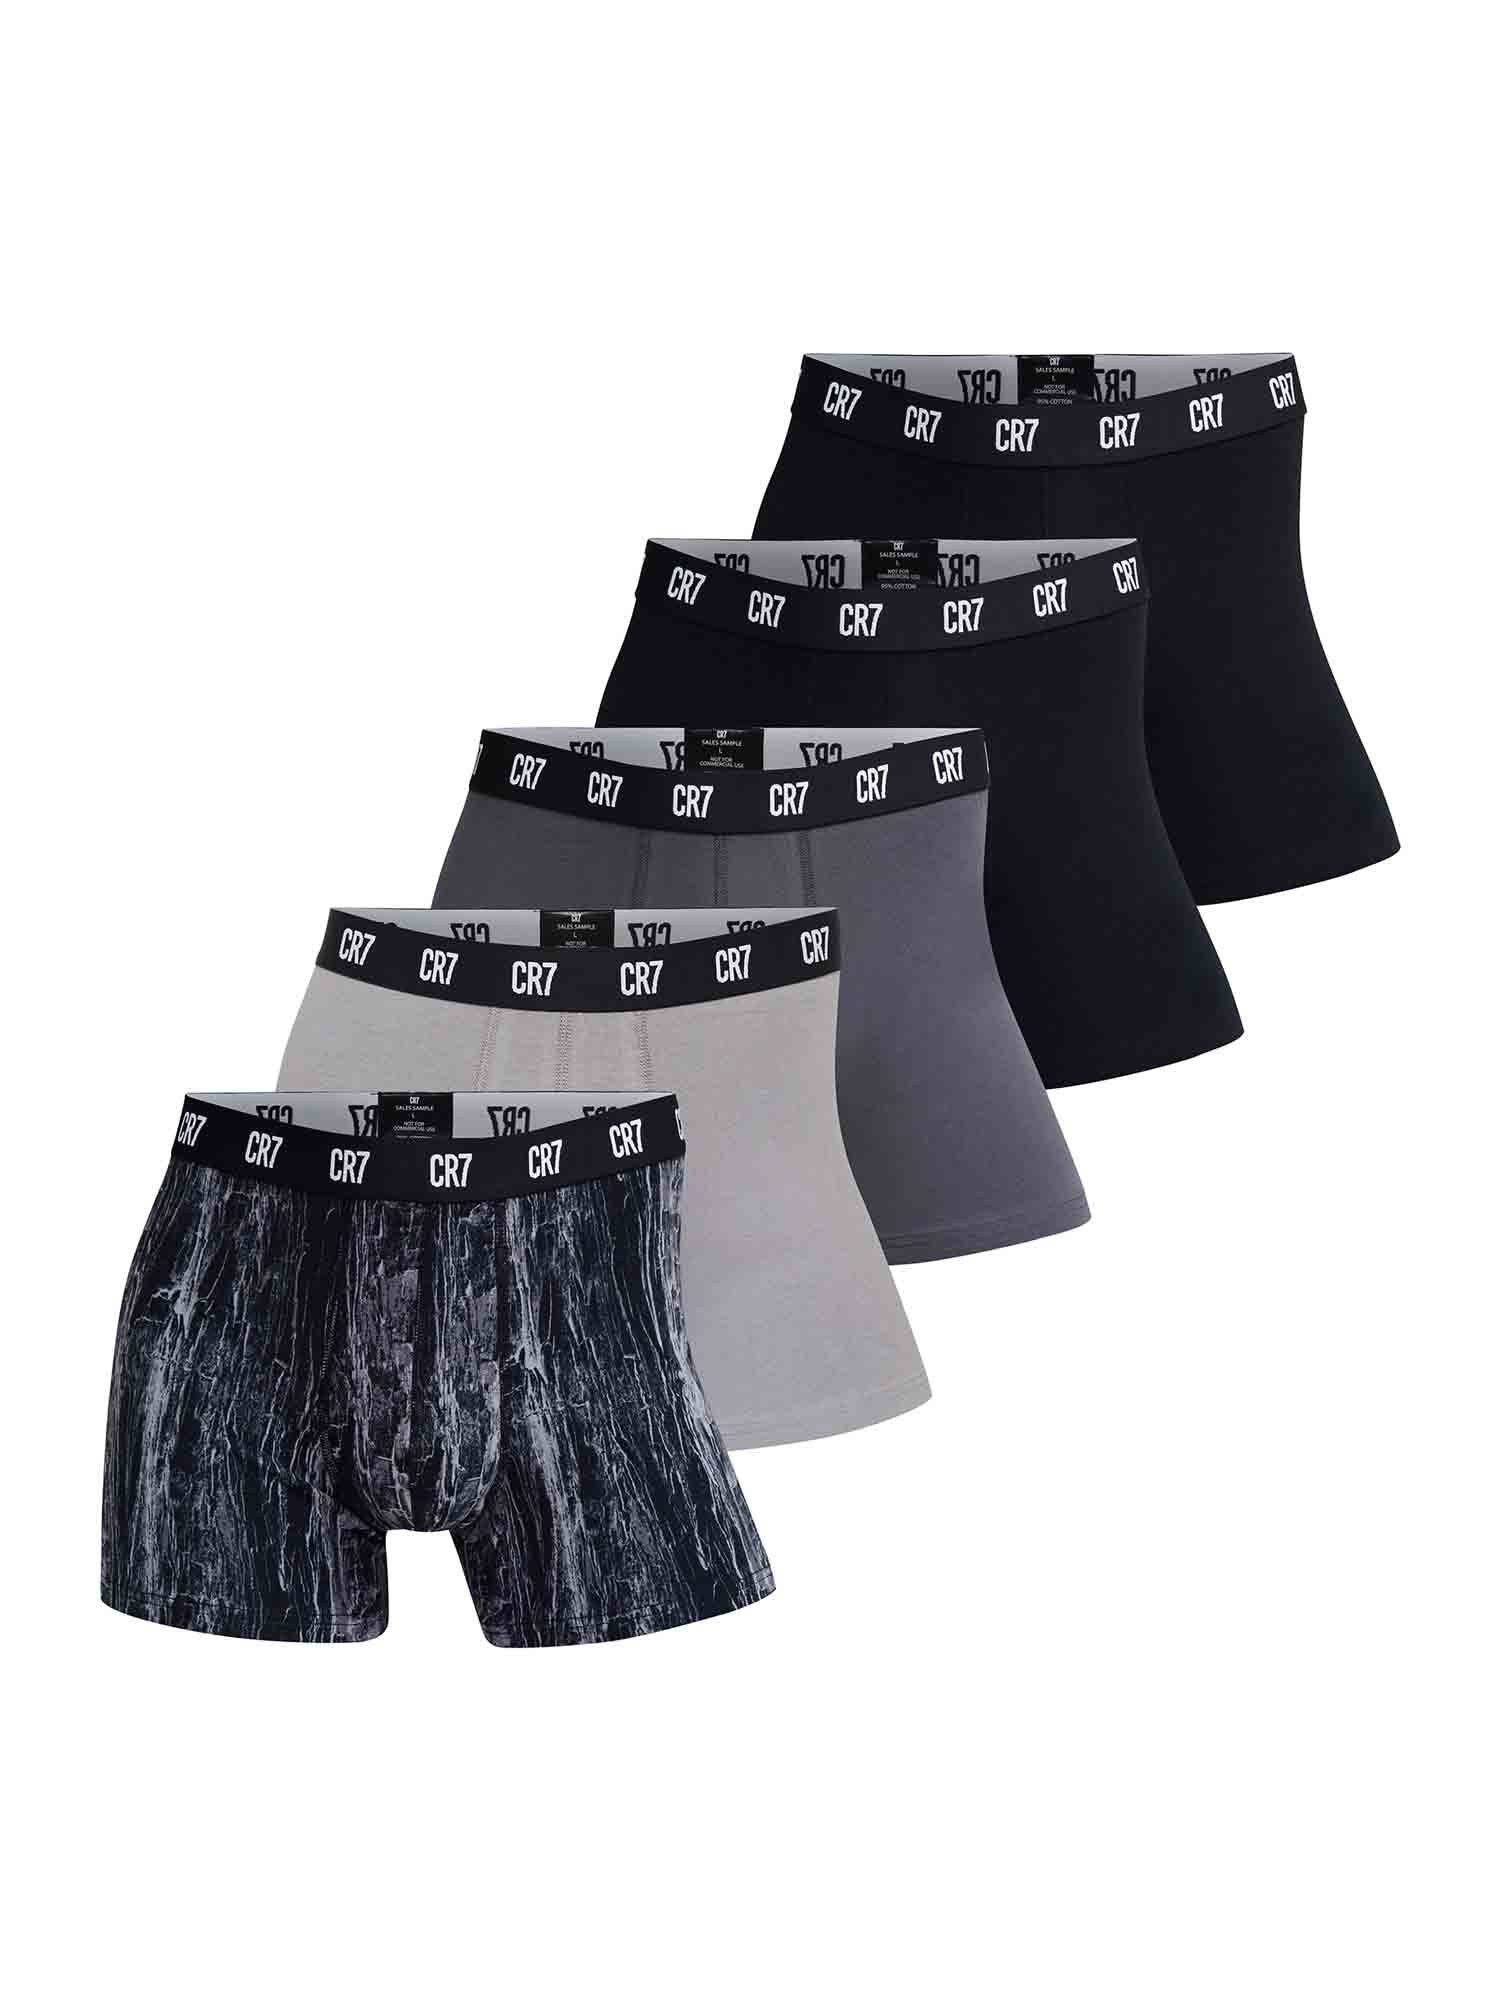 Retro CR7 Boxershorts Männer Pants 17 Multi Pants (5-St) Retro Herren Multipack Trunks